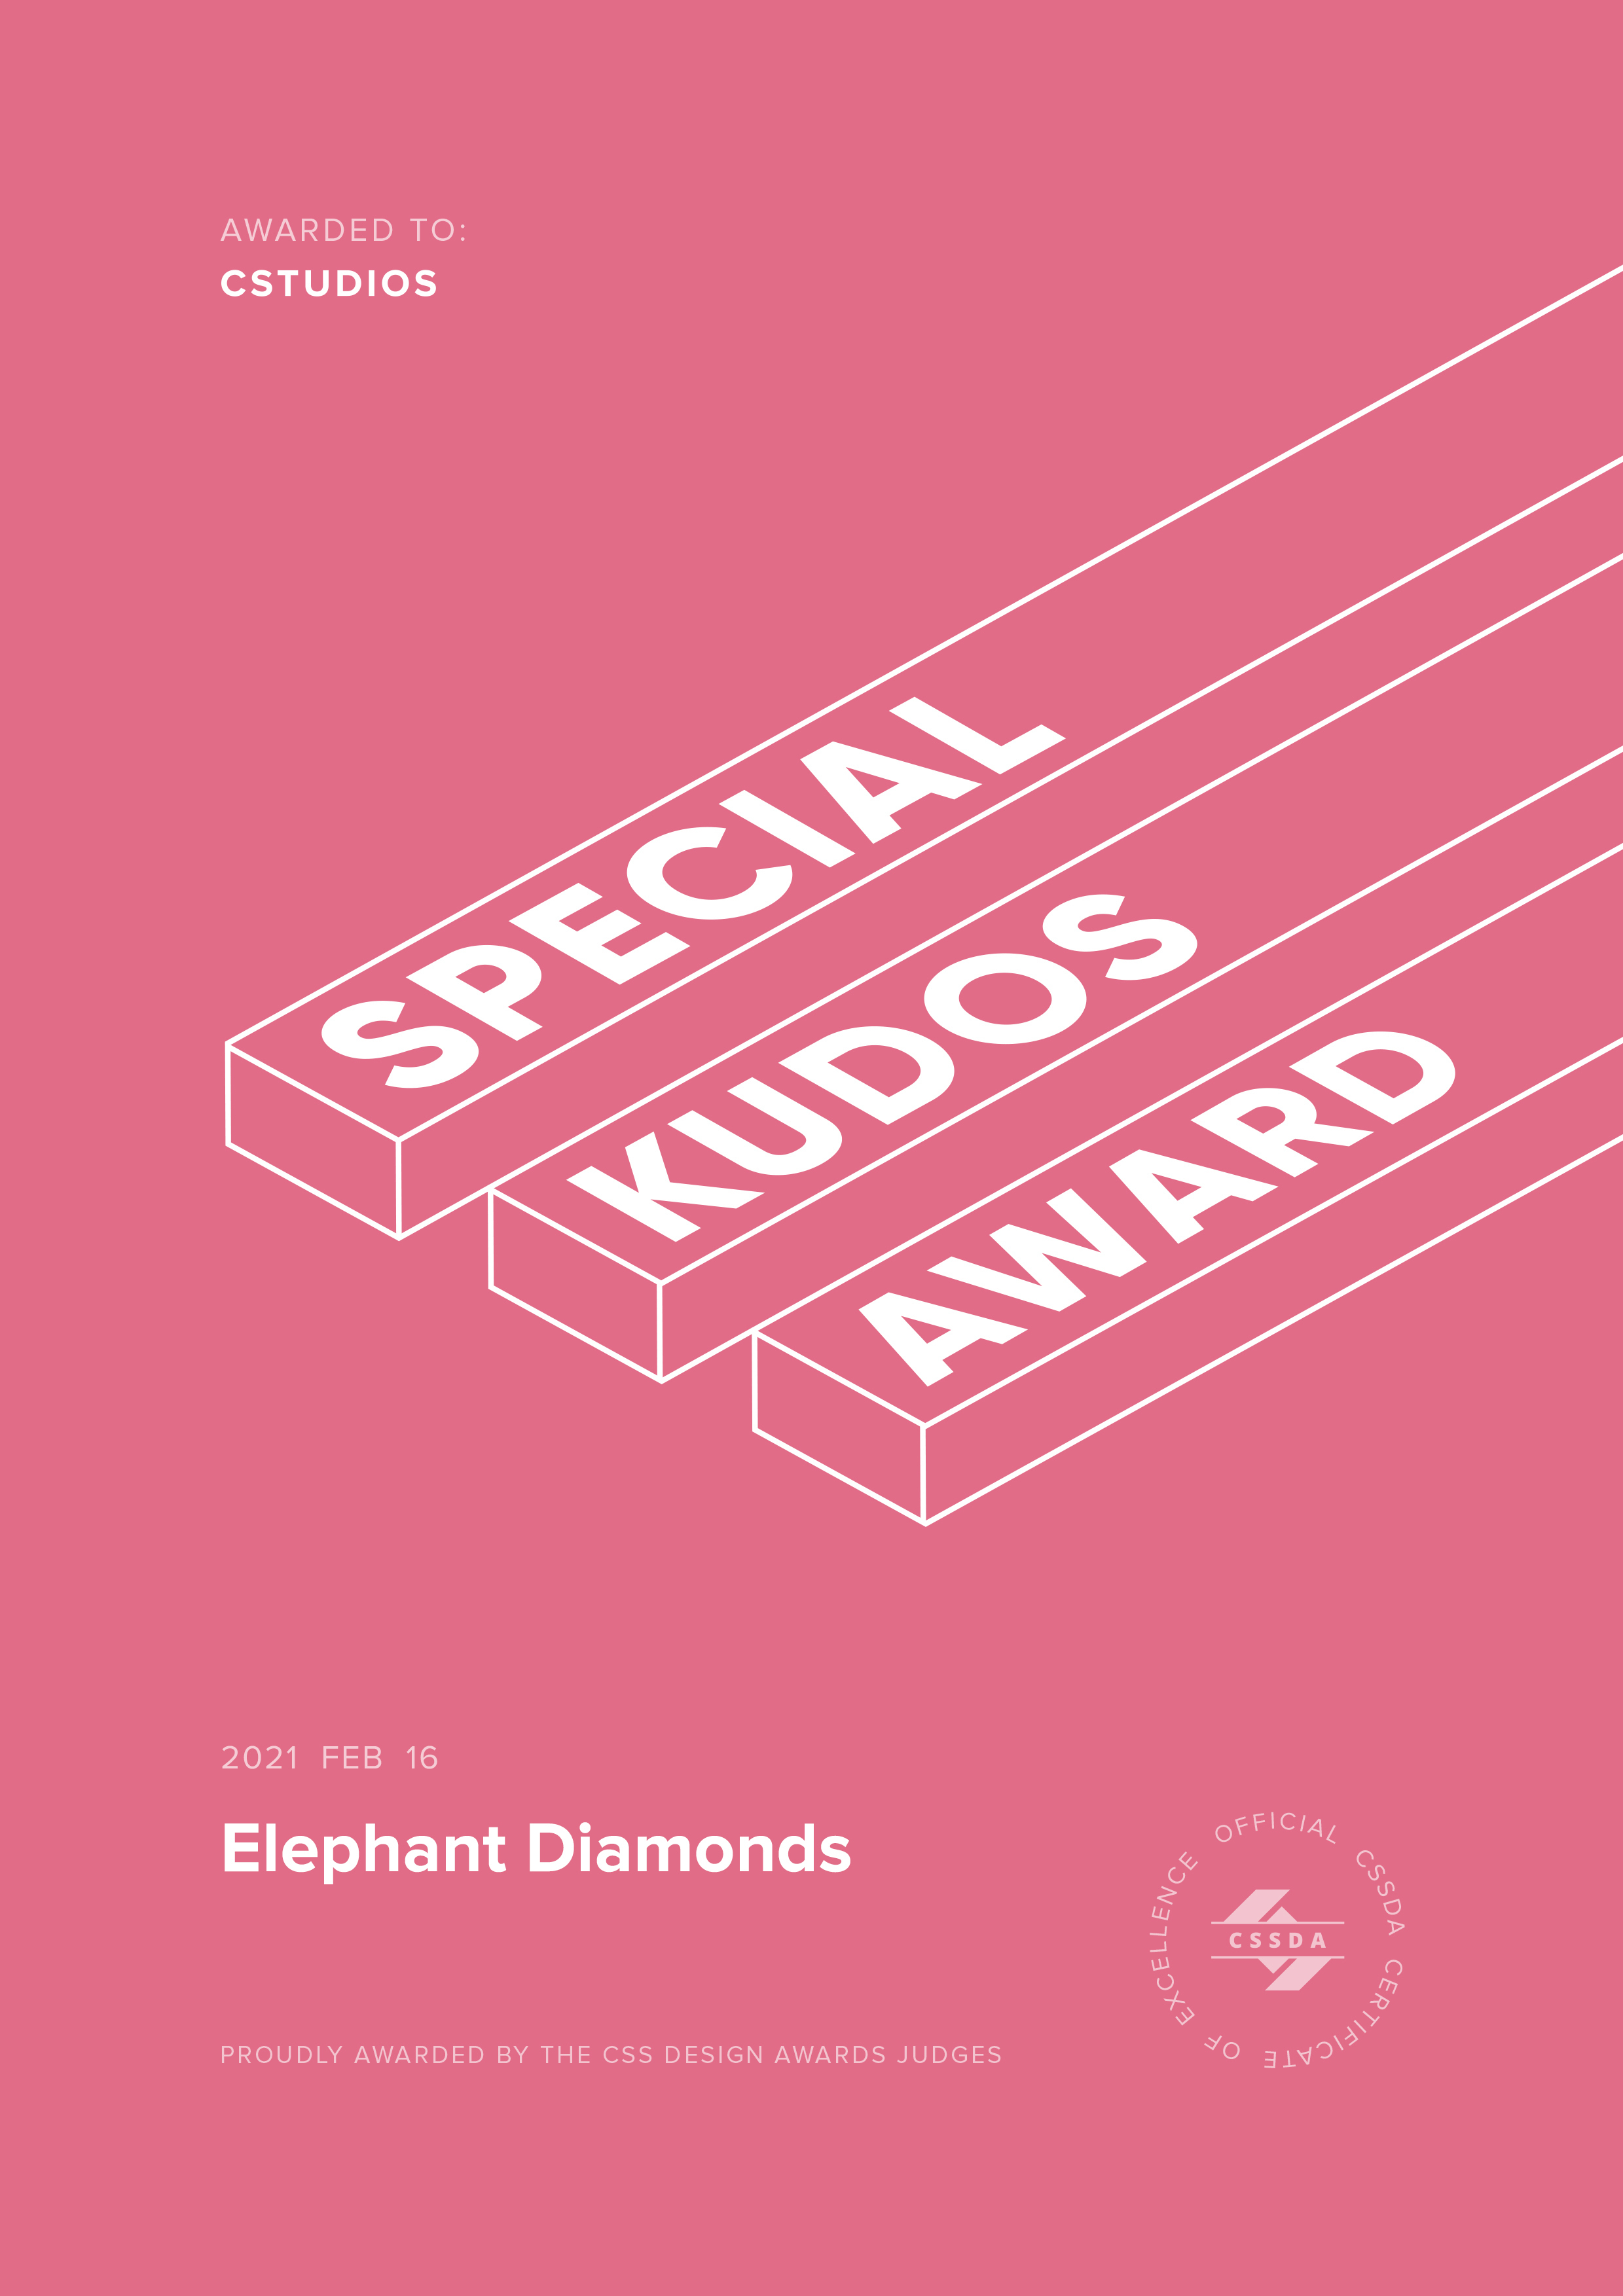 Elephantdiamonds css award